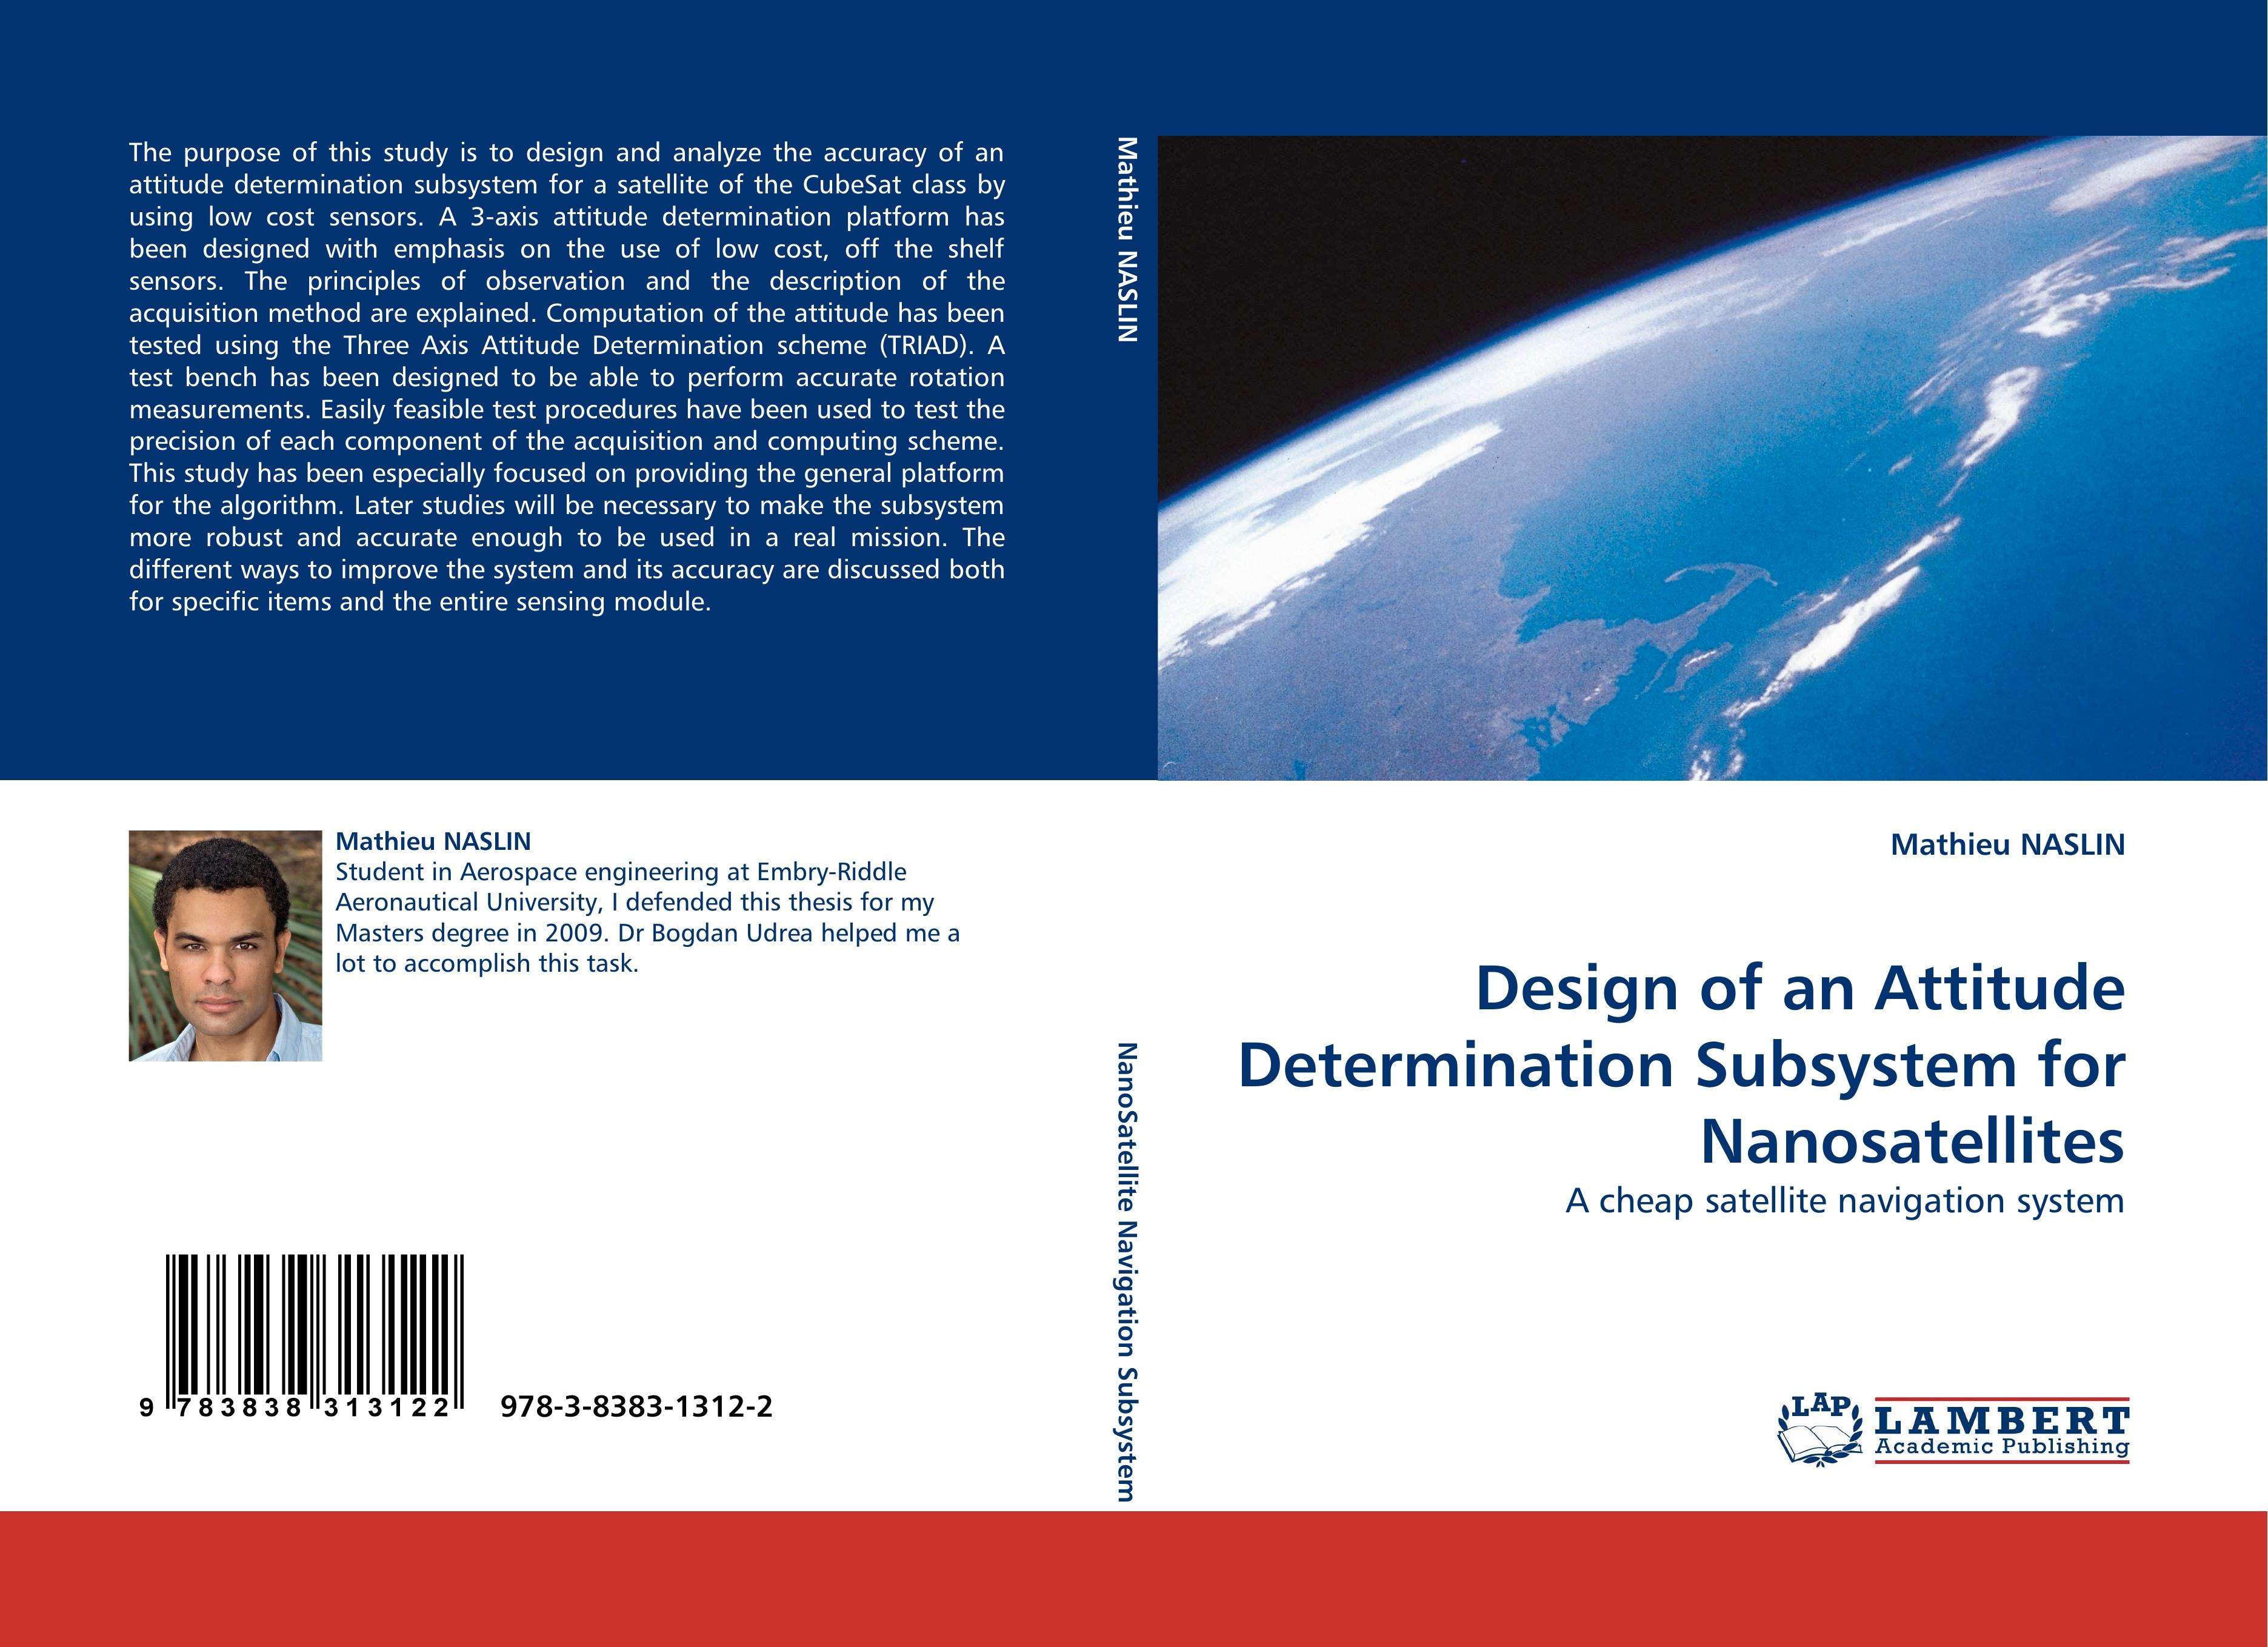 Design of an Attitude Determination Subsystem for Nanosatellites